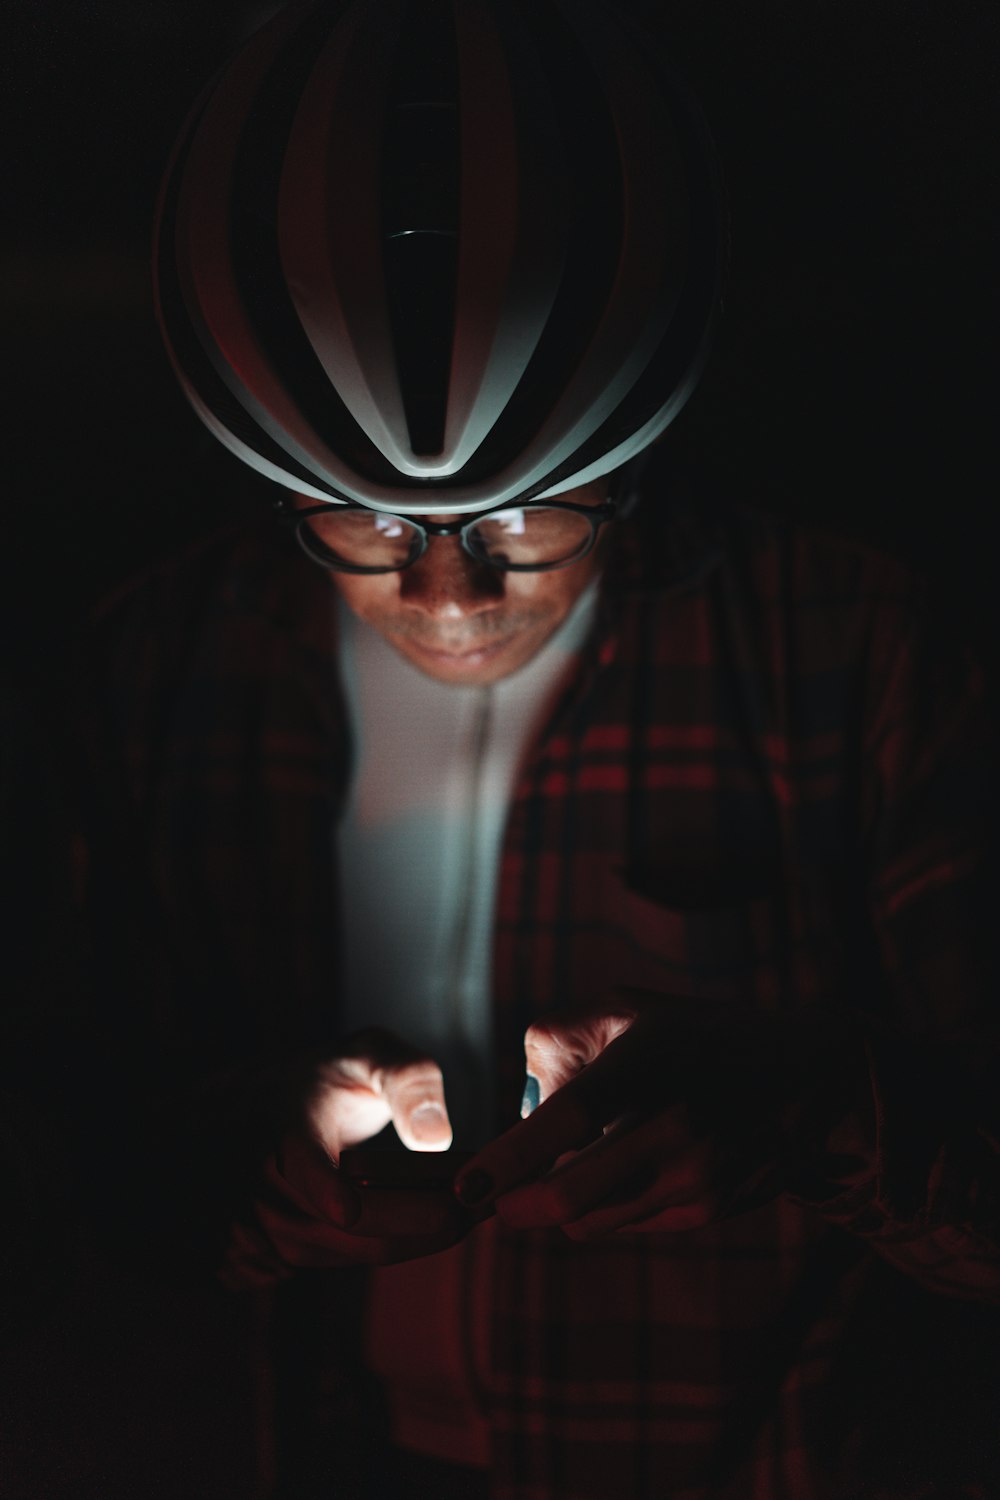 a man wearing a helmet using a cell phone